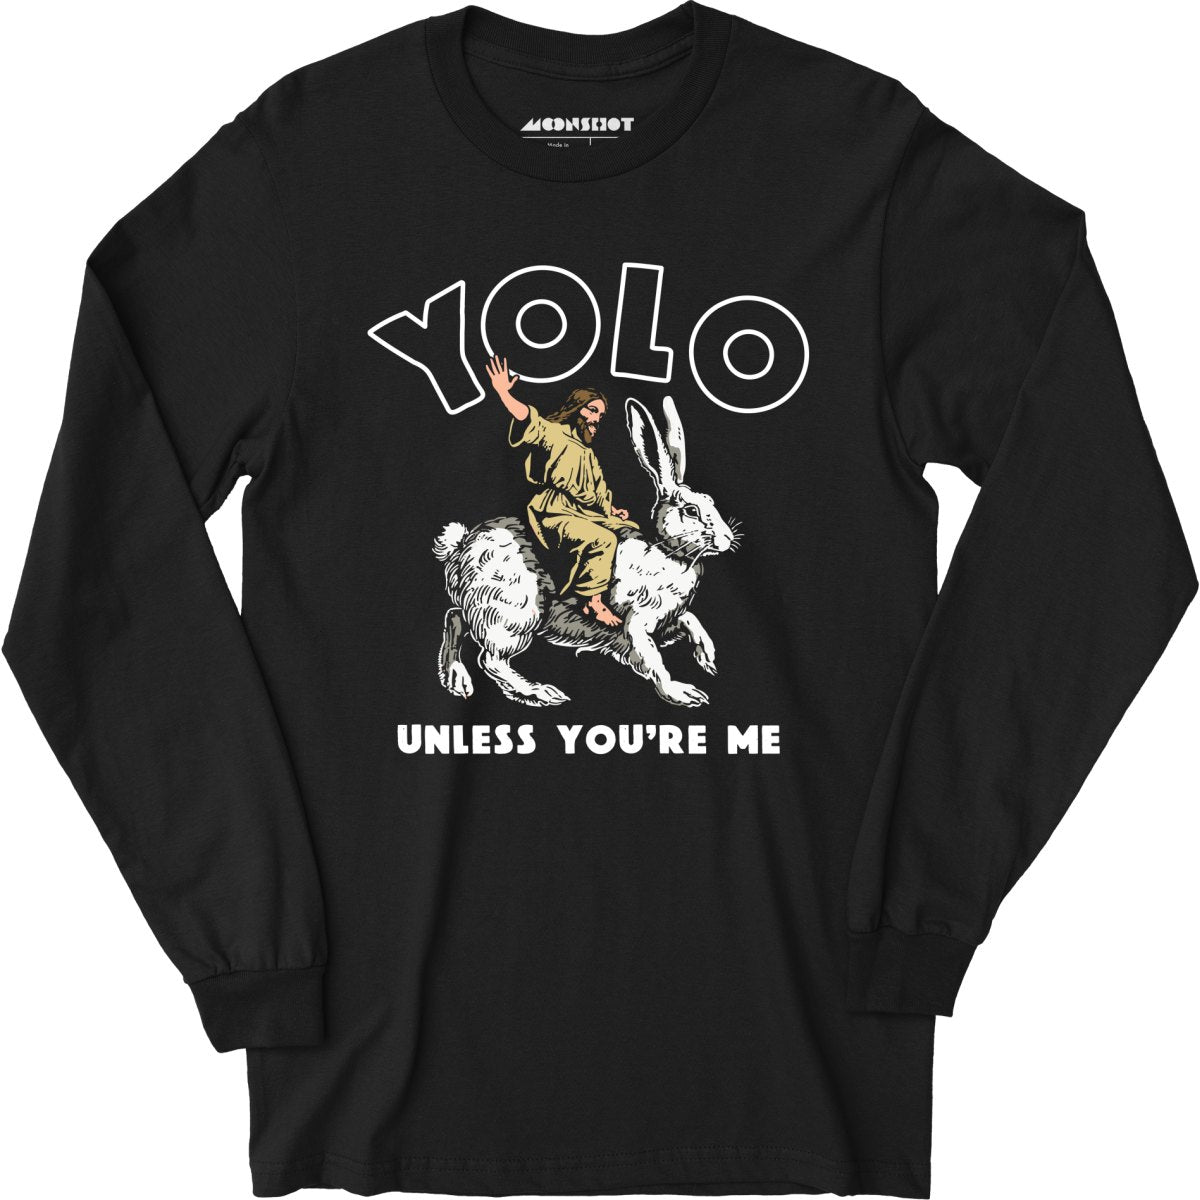 Yolo - Unless You're Me - Long Sleeve T-Shirt